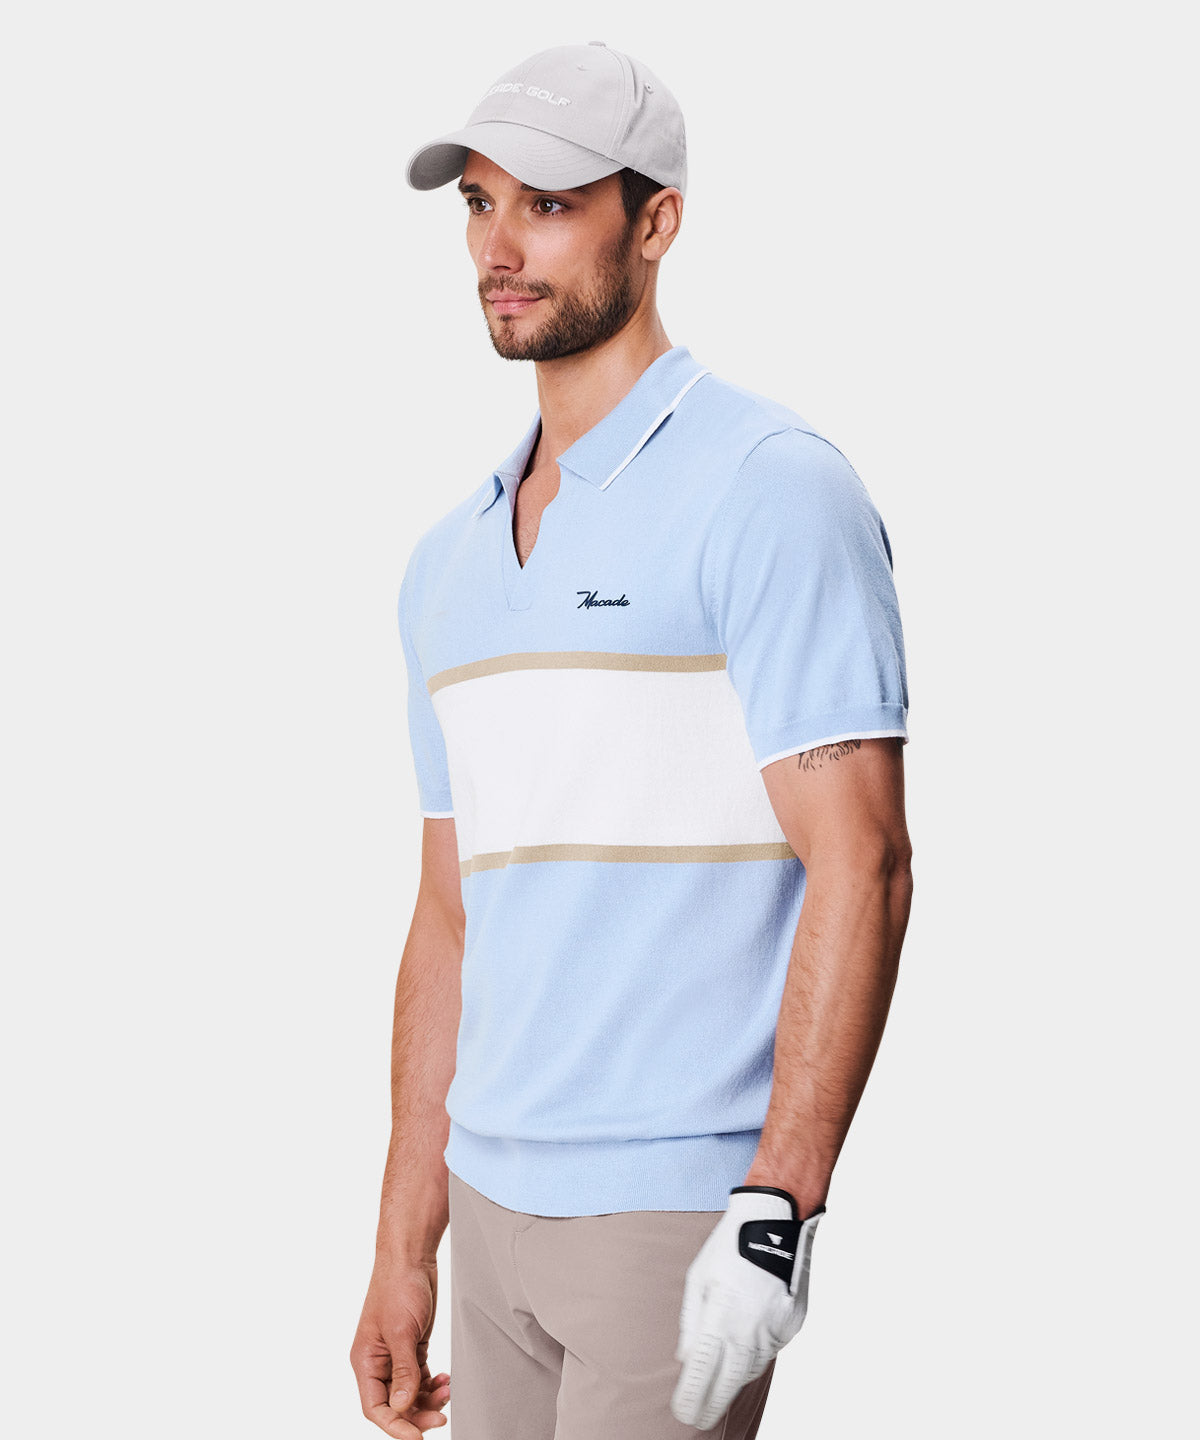 Mac Intarsia Knit Shirt Macade Golf